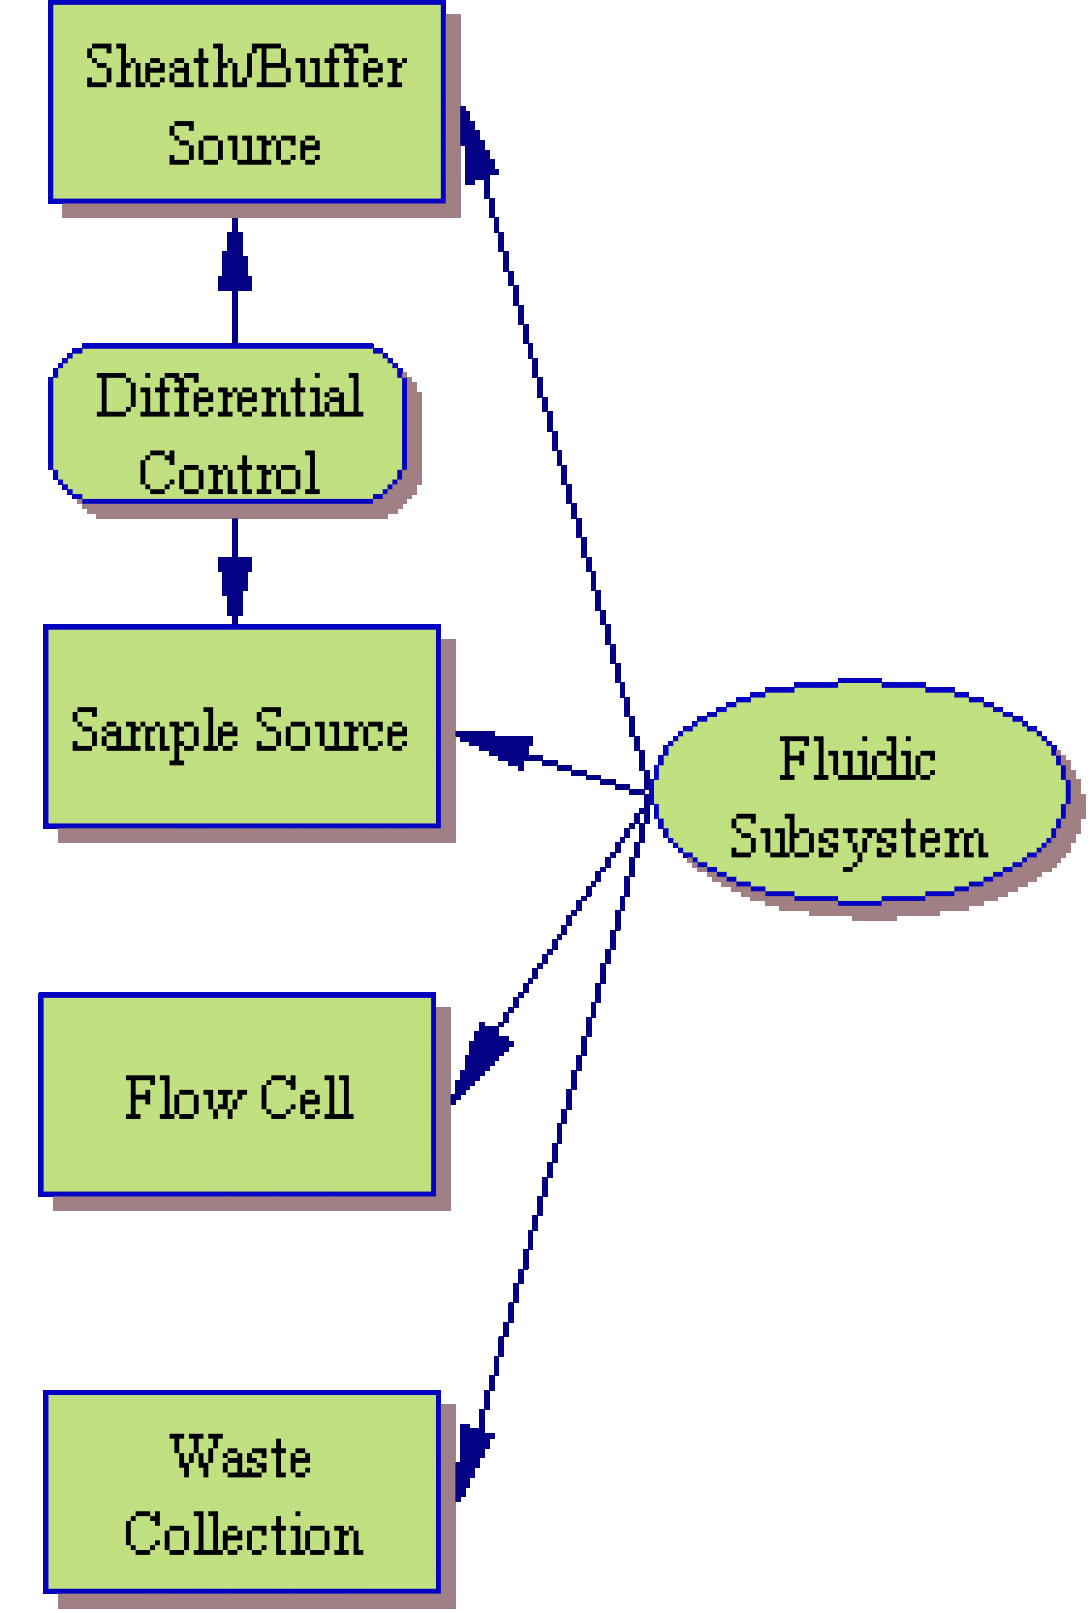 Flow Cytometry fluidic subsystem illustration